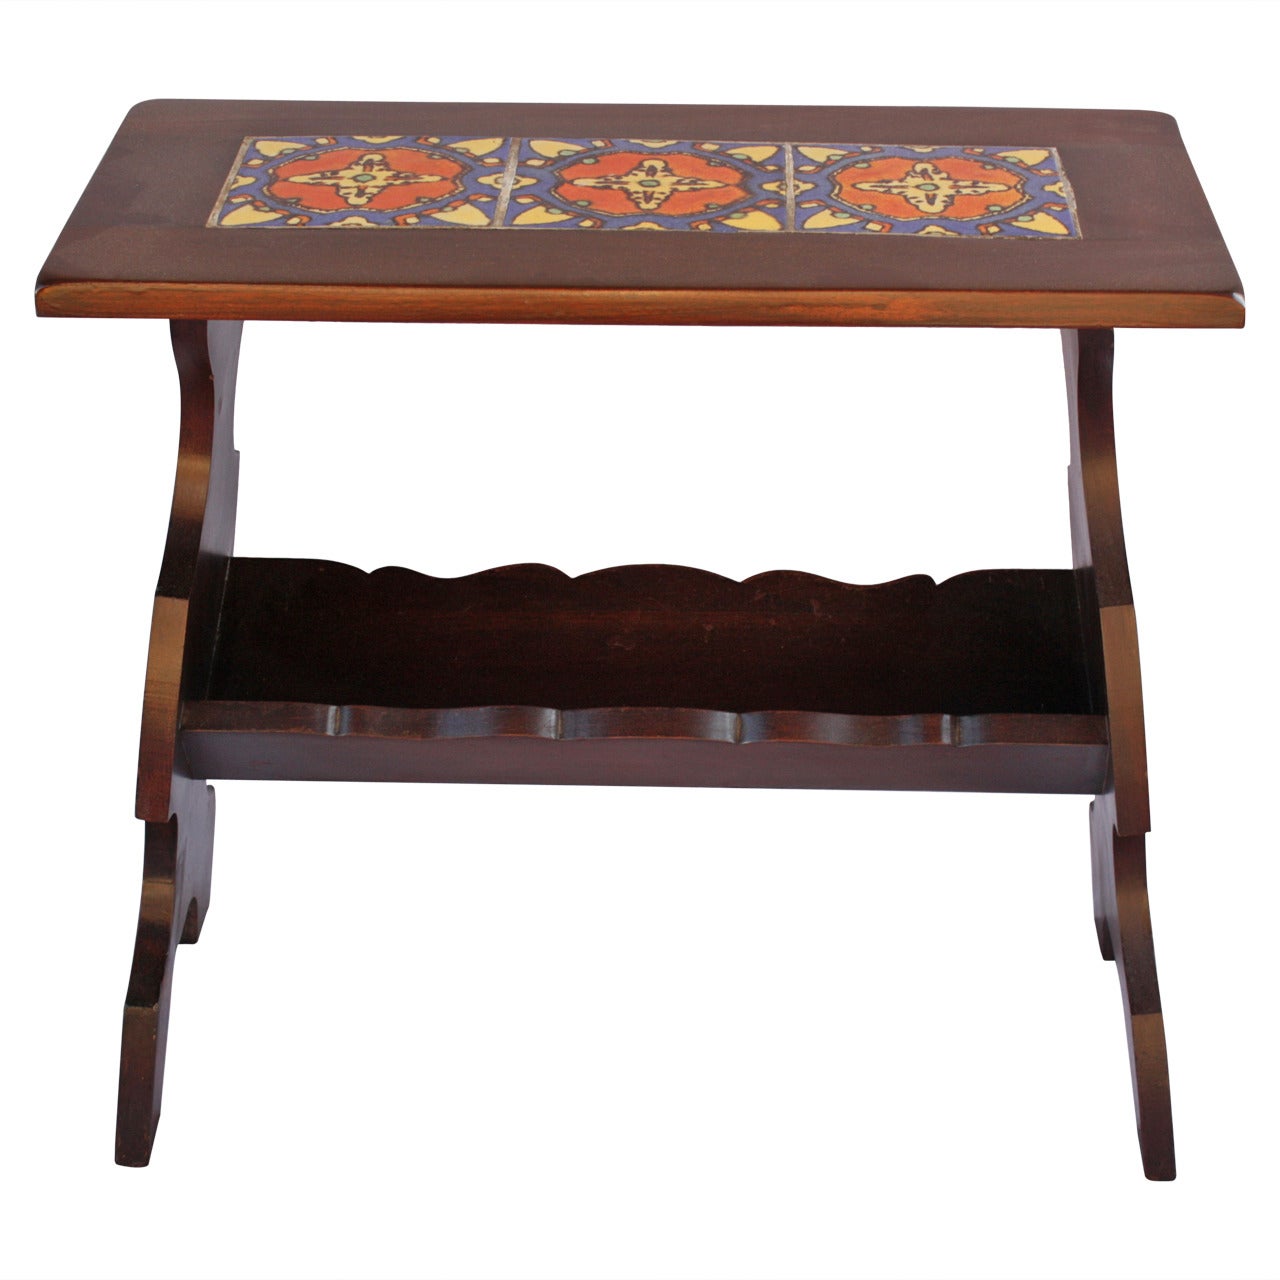 Malibu 1920s Tile Table